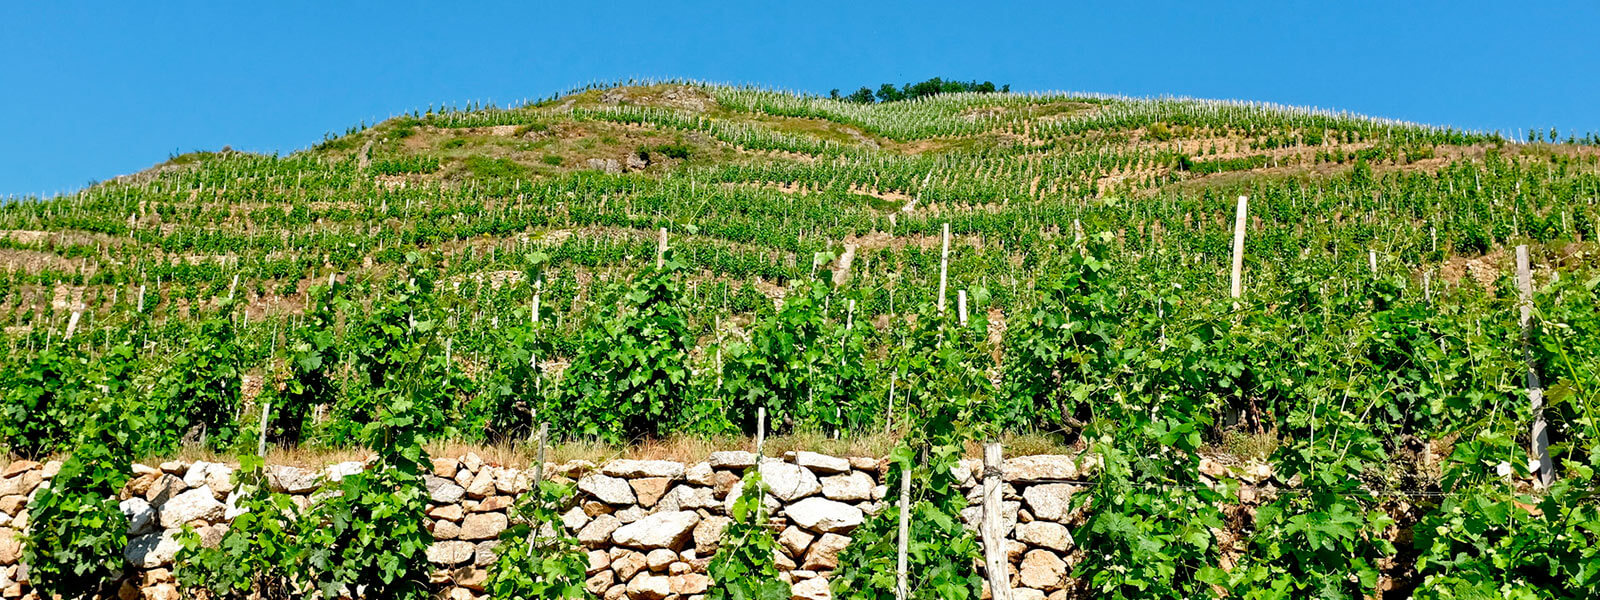 Kanpai Tourism - Northern Cotes du Rhone wine tour